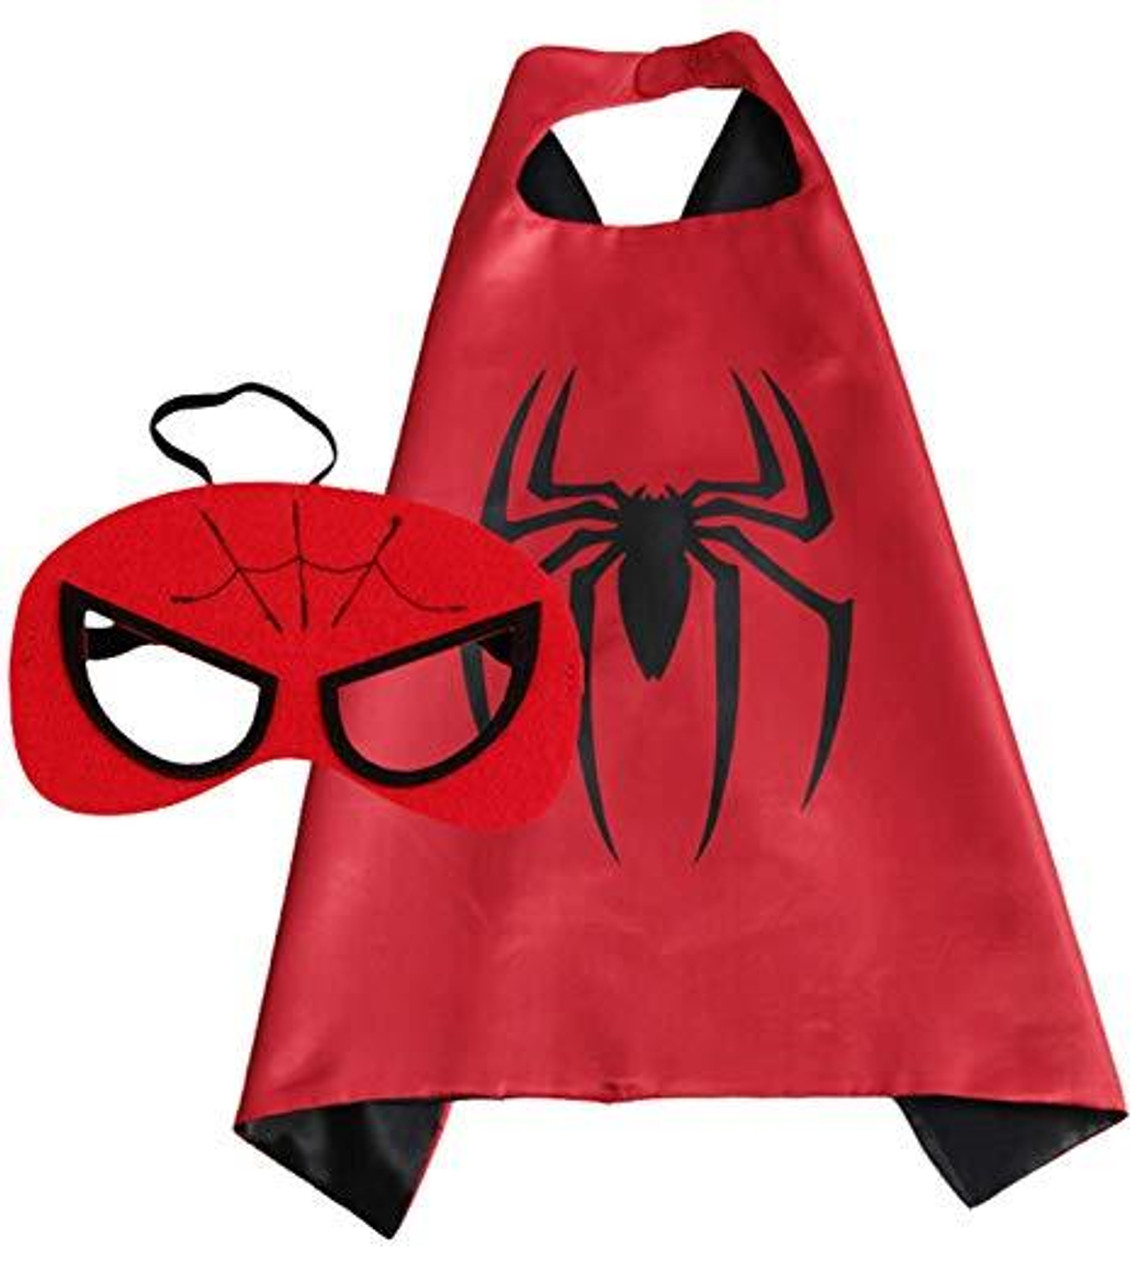 FAST SHIP-Kids Christmas Gift Party Costume Batman Superman Spiderman Cape+Mask